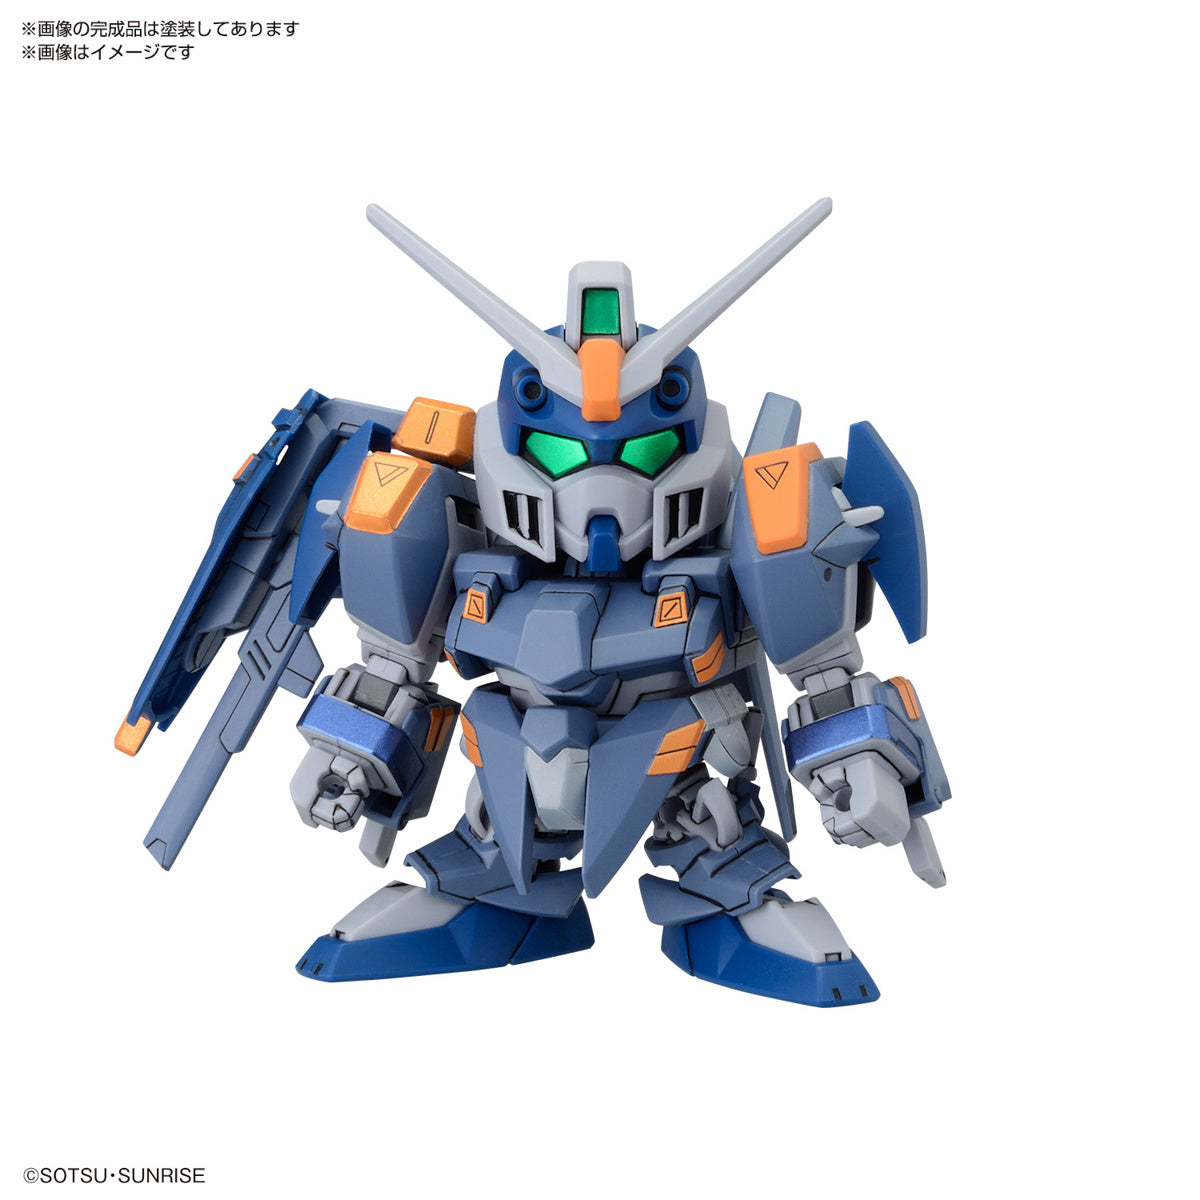 Gundam SD BB Senshi C.E. 73 Stargazer Set of 4 Model Kit